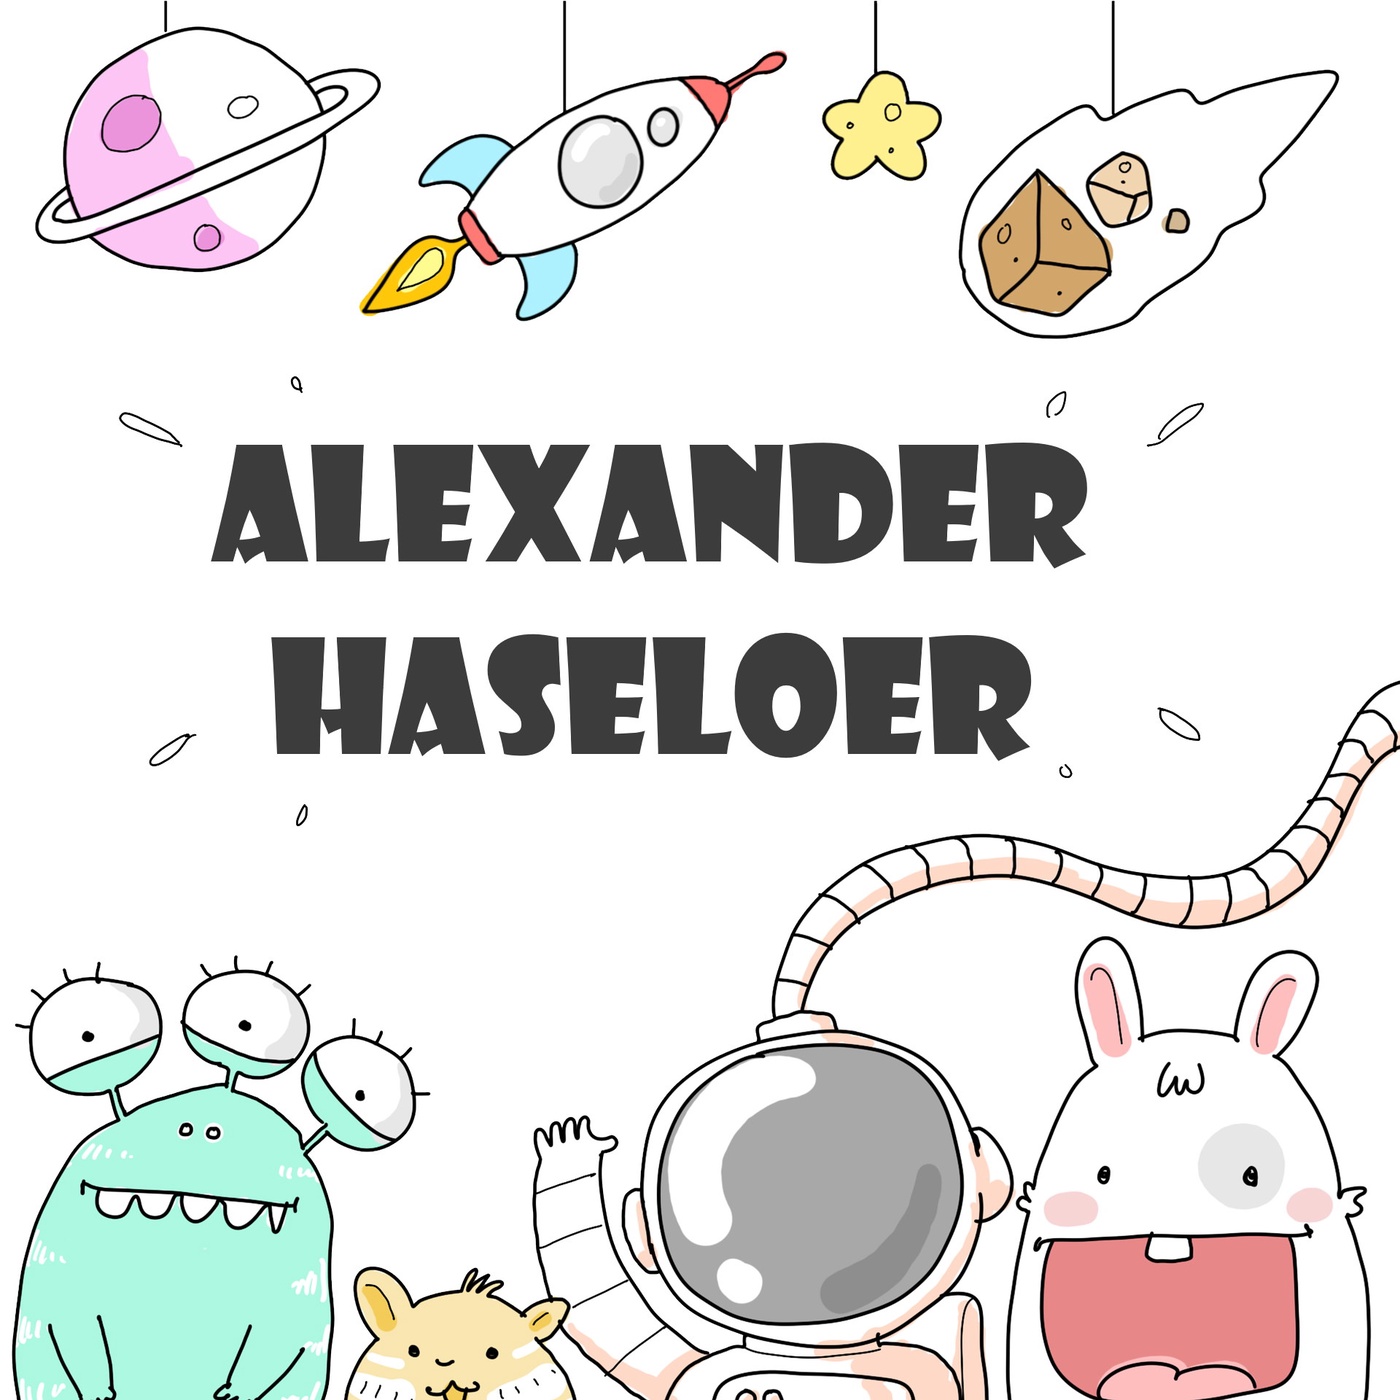 Alexander Haseloer